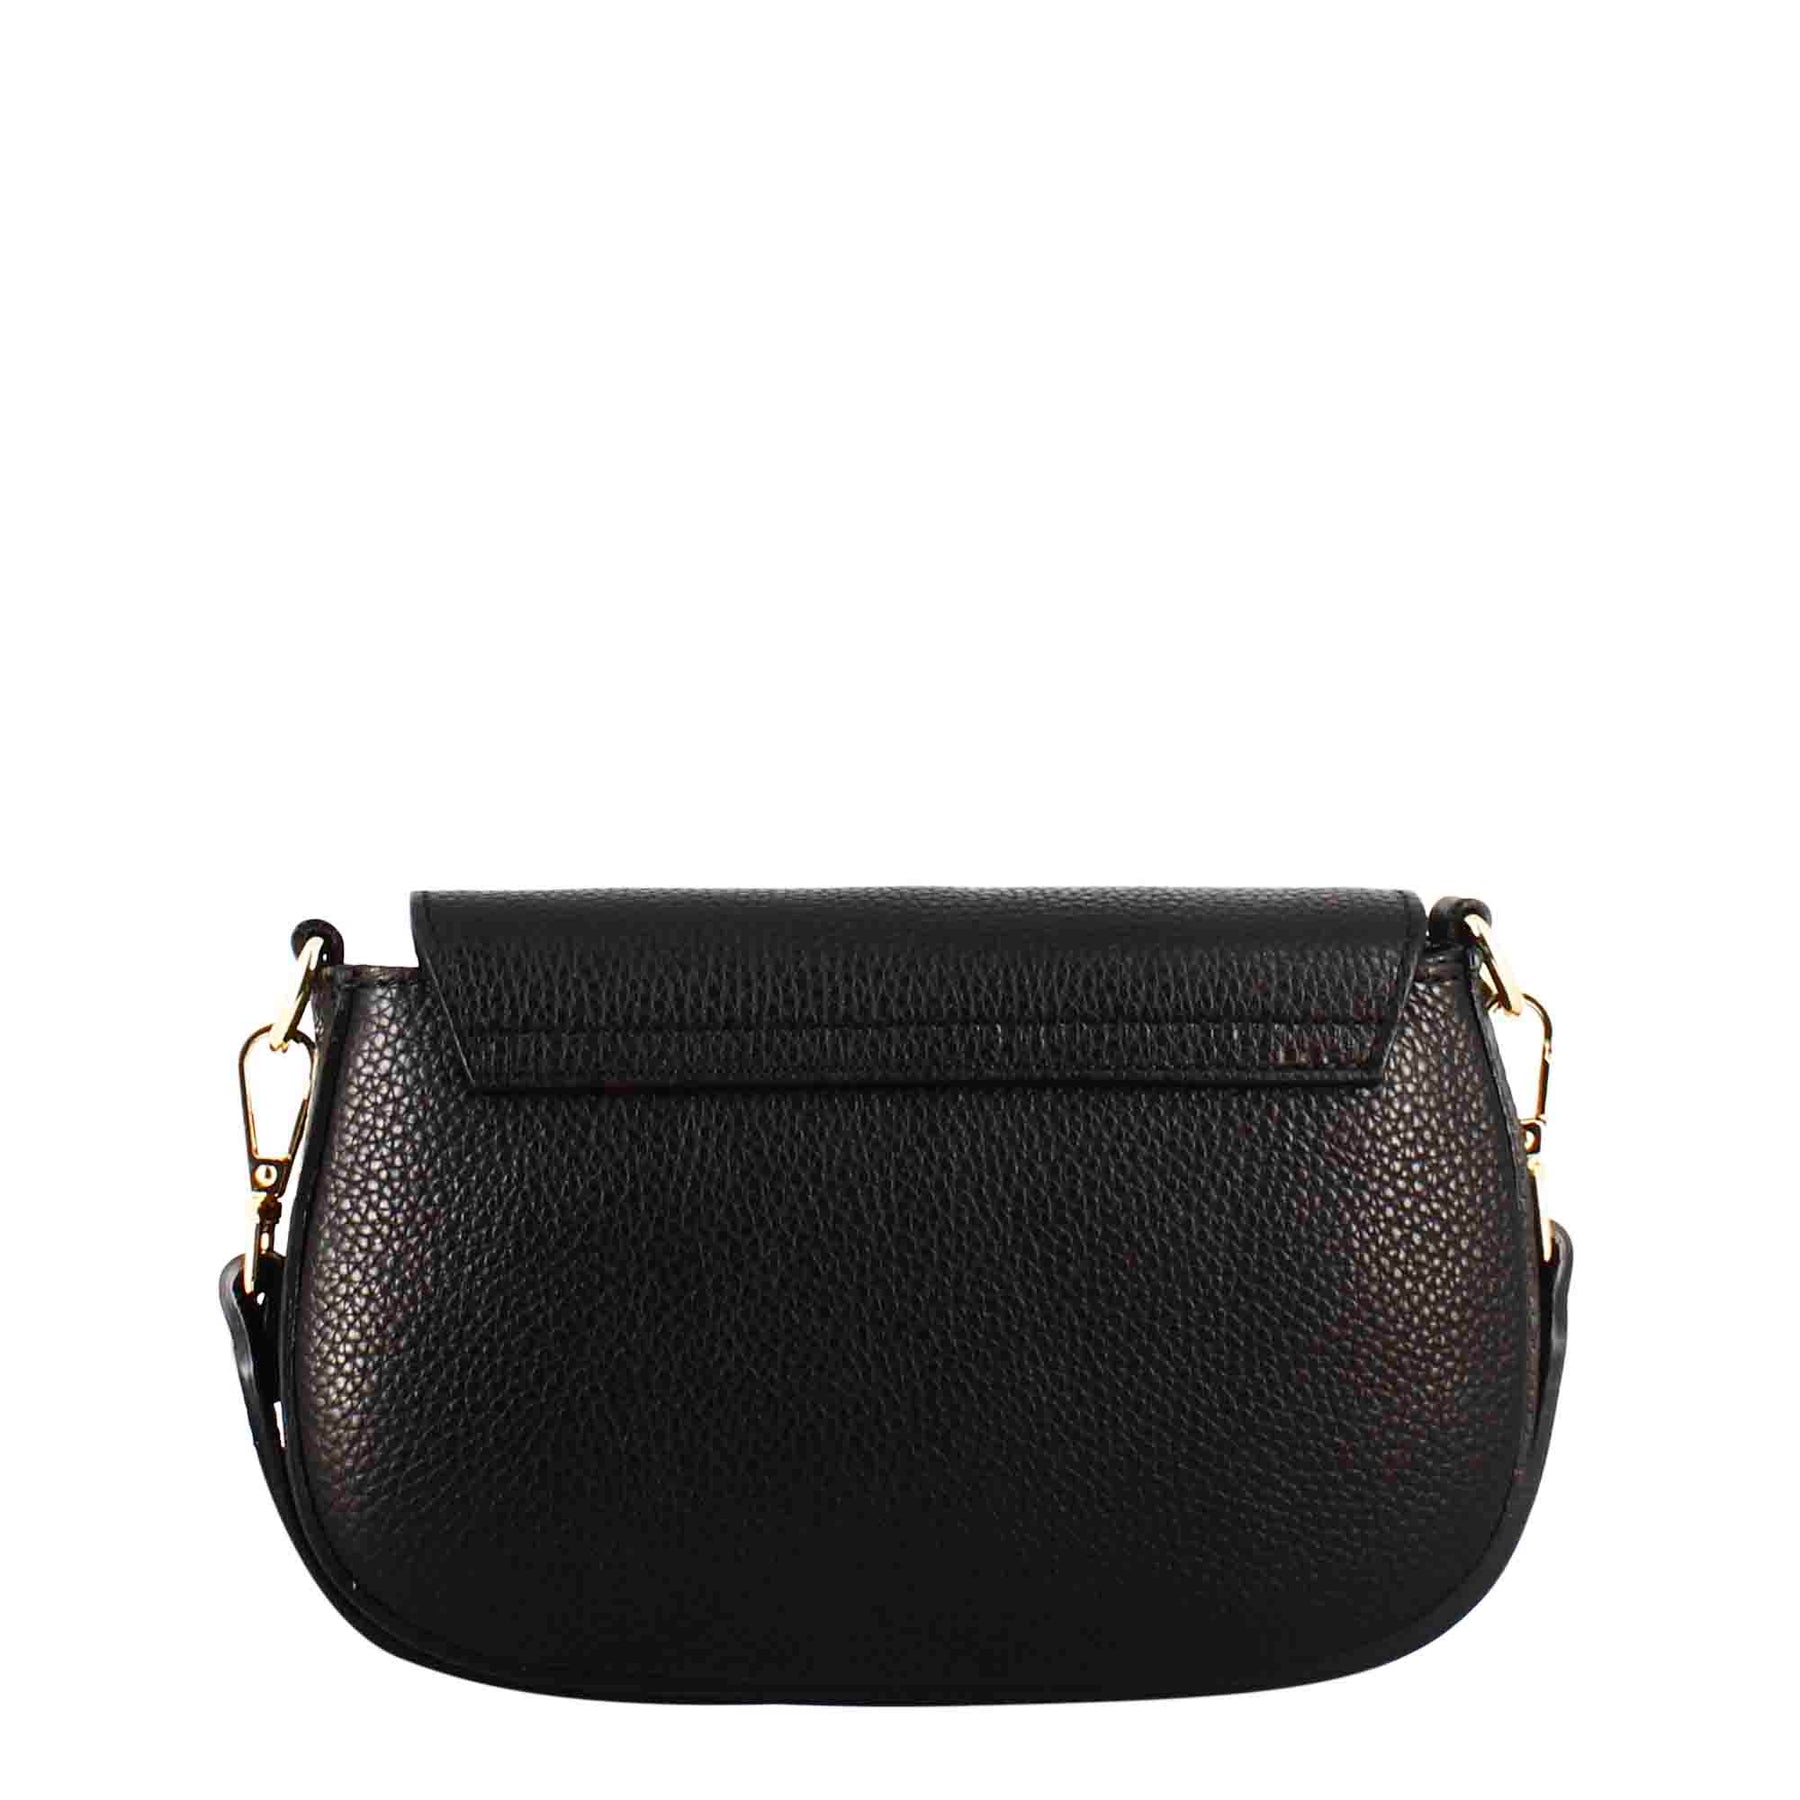 Grace women's black leather handbag